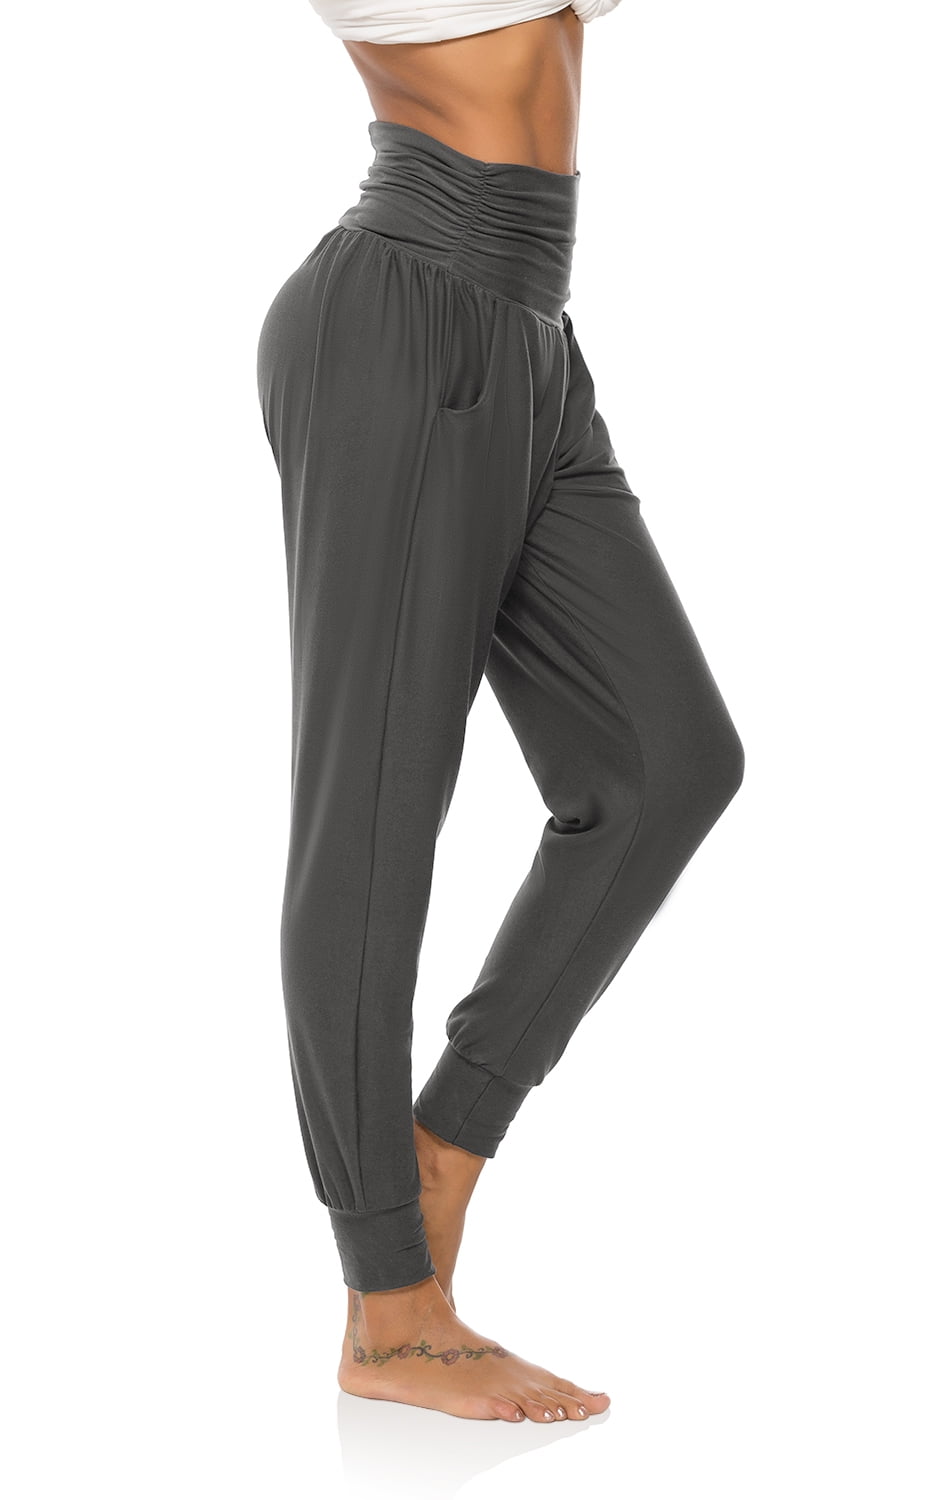 JIAGENA Women's Comfy Wide Leg Pants Yoga Workout Sweatpants Loose